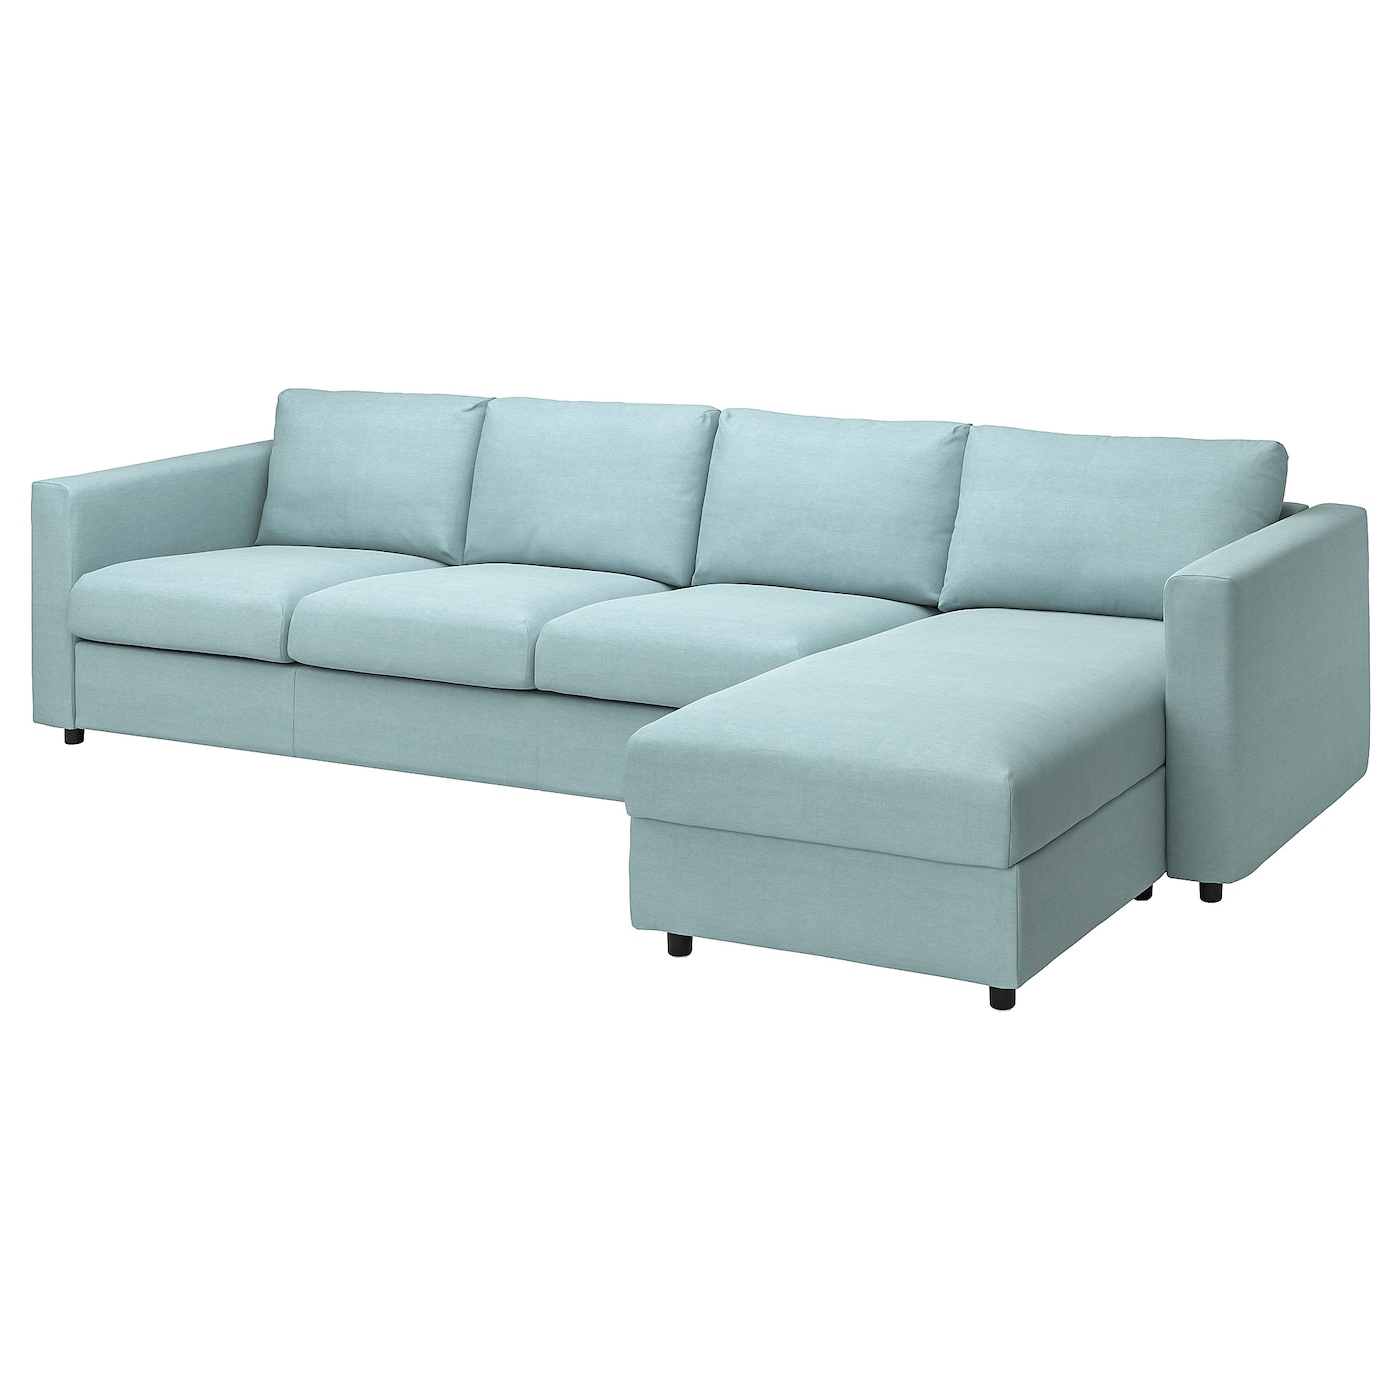 ВИМЛЕ 4-местный диван + диван, Саксемара светло-синий VIMLE IKEA